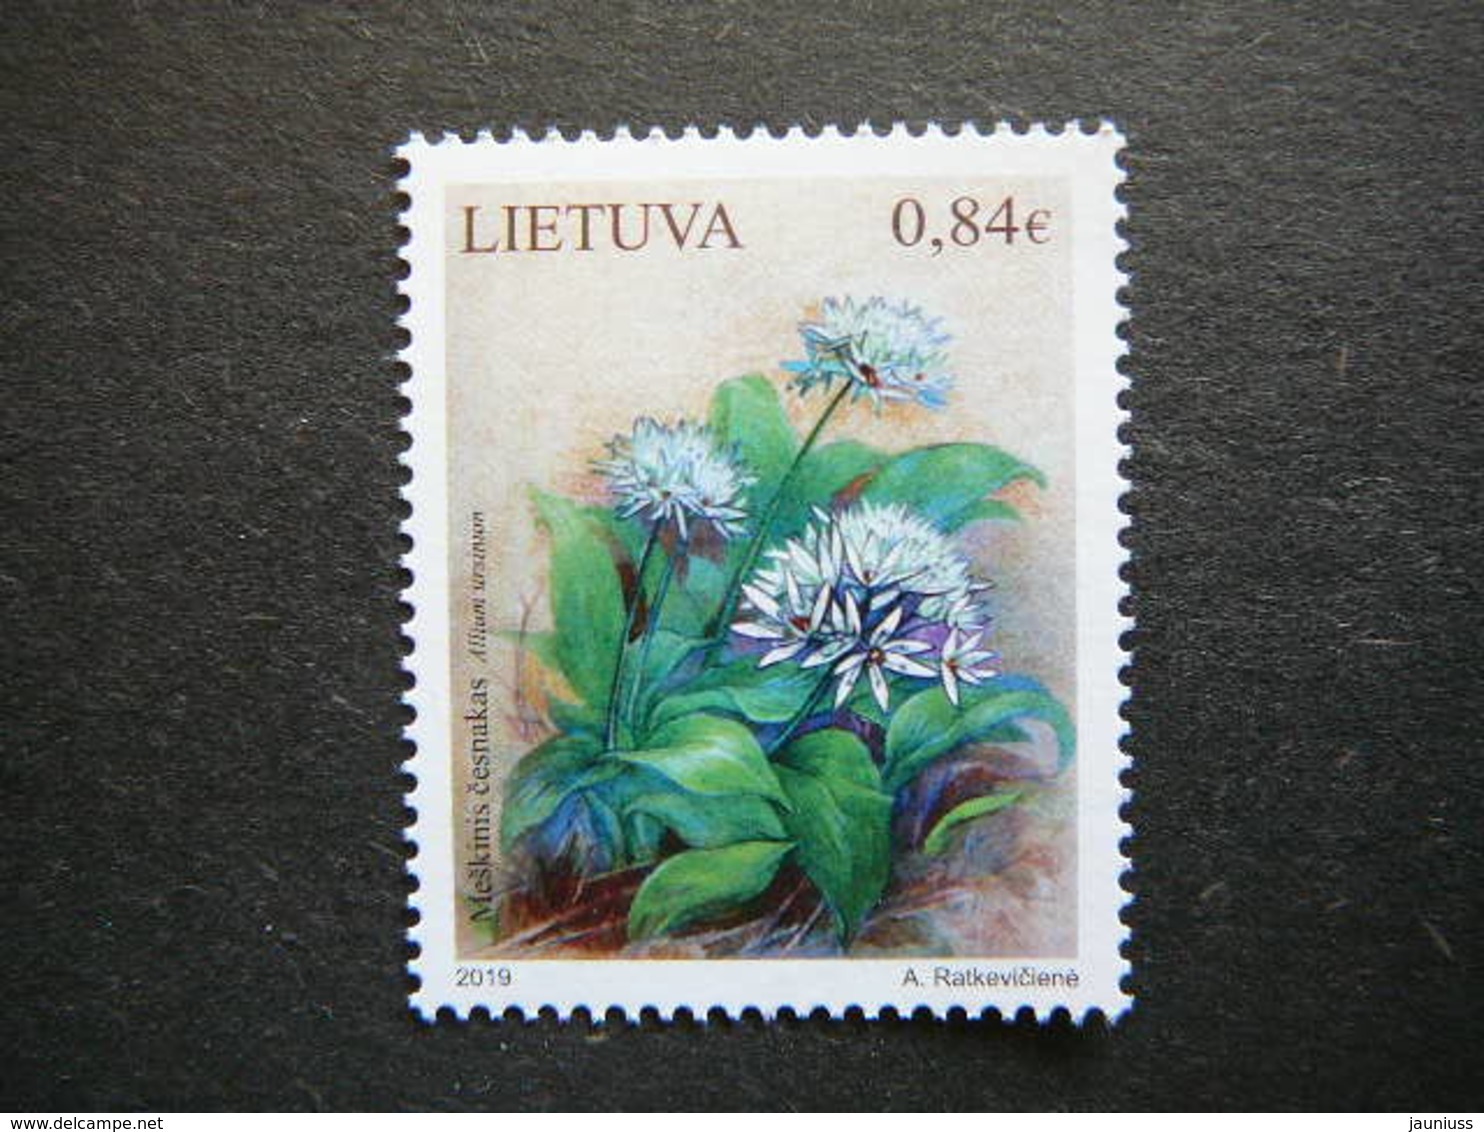 Flora Red Book Of Lithuania # Lietuva Litauen Lituanie Litouwen # 2019 MNH #Mi. - Lituanie